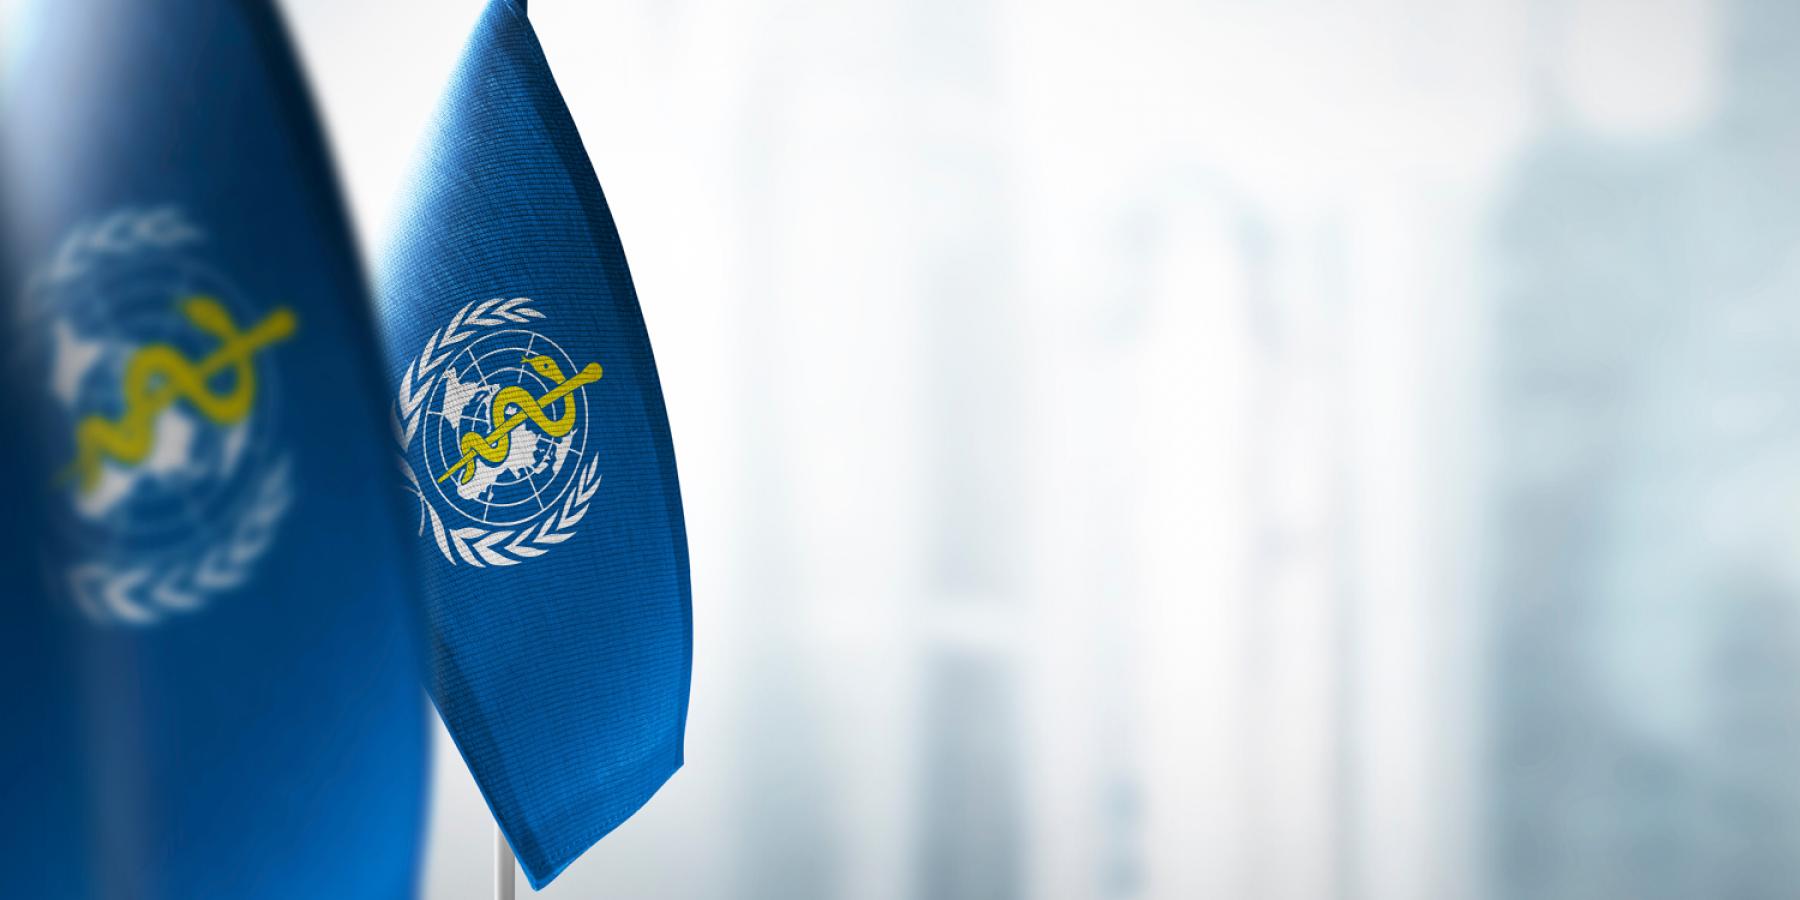 World Health Organization Flags